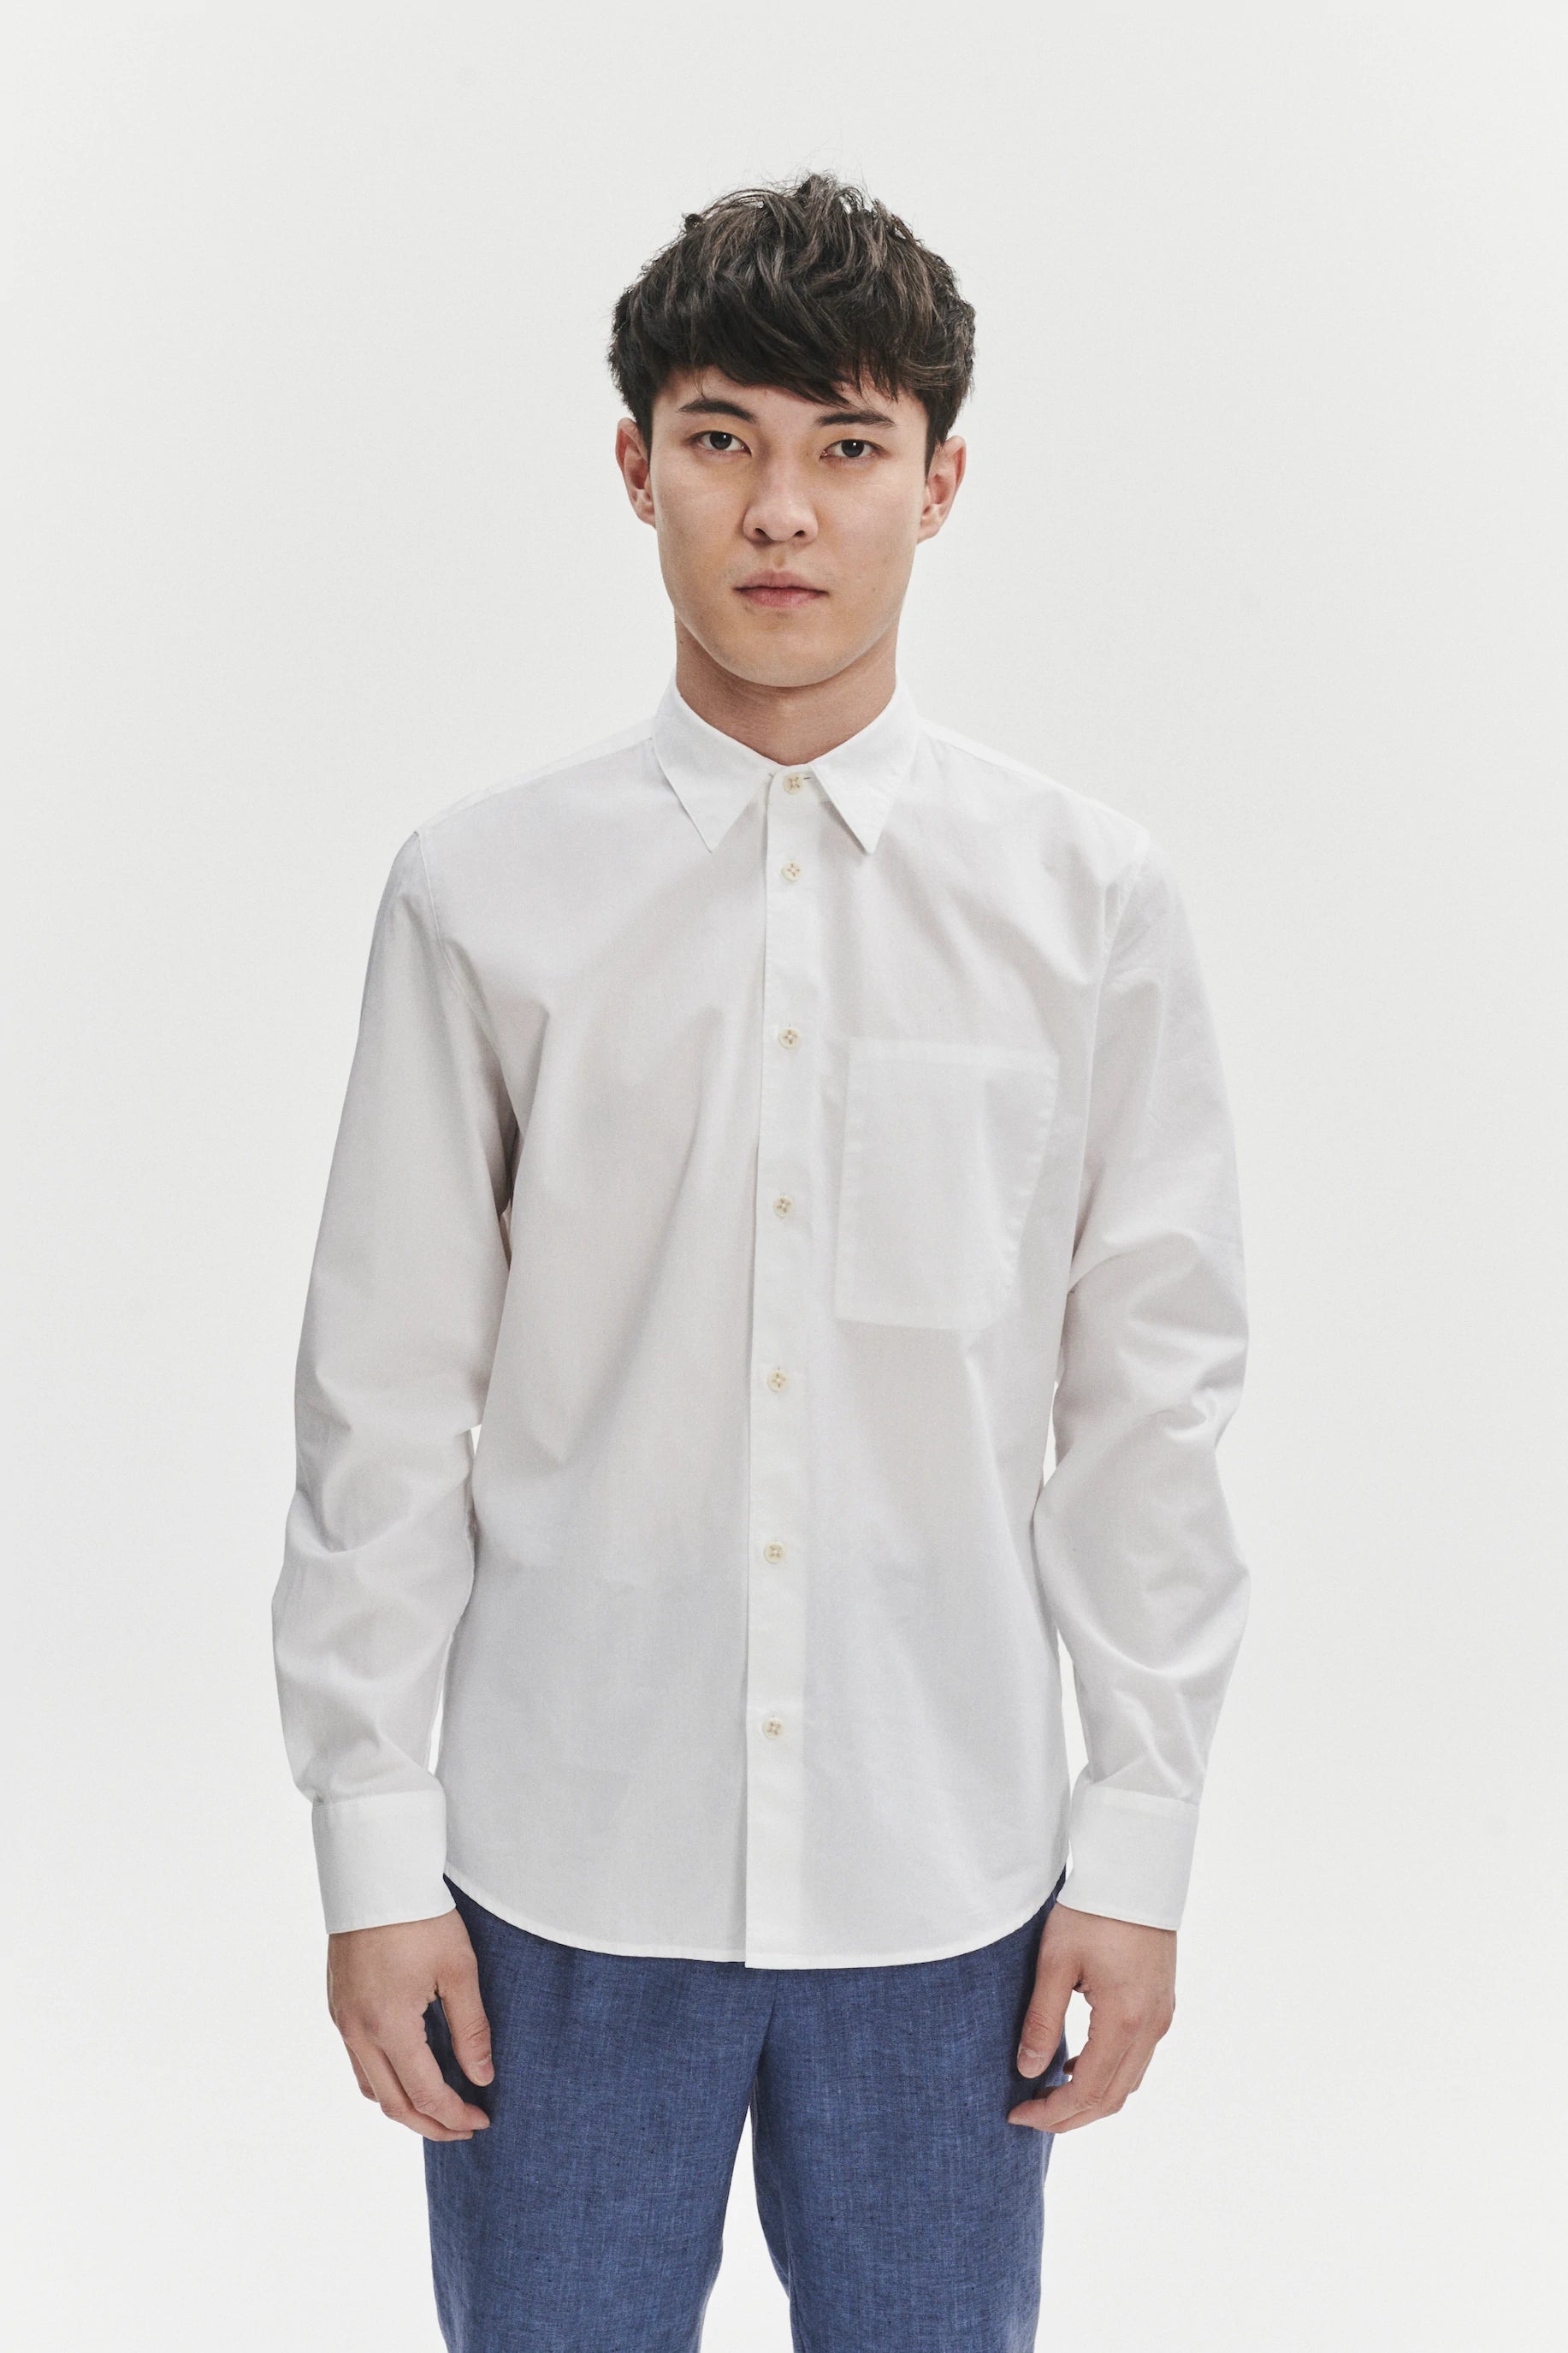 feel-good-shirt-in-a-white-fine-organic-portuguese-cotton-poplin